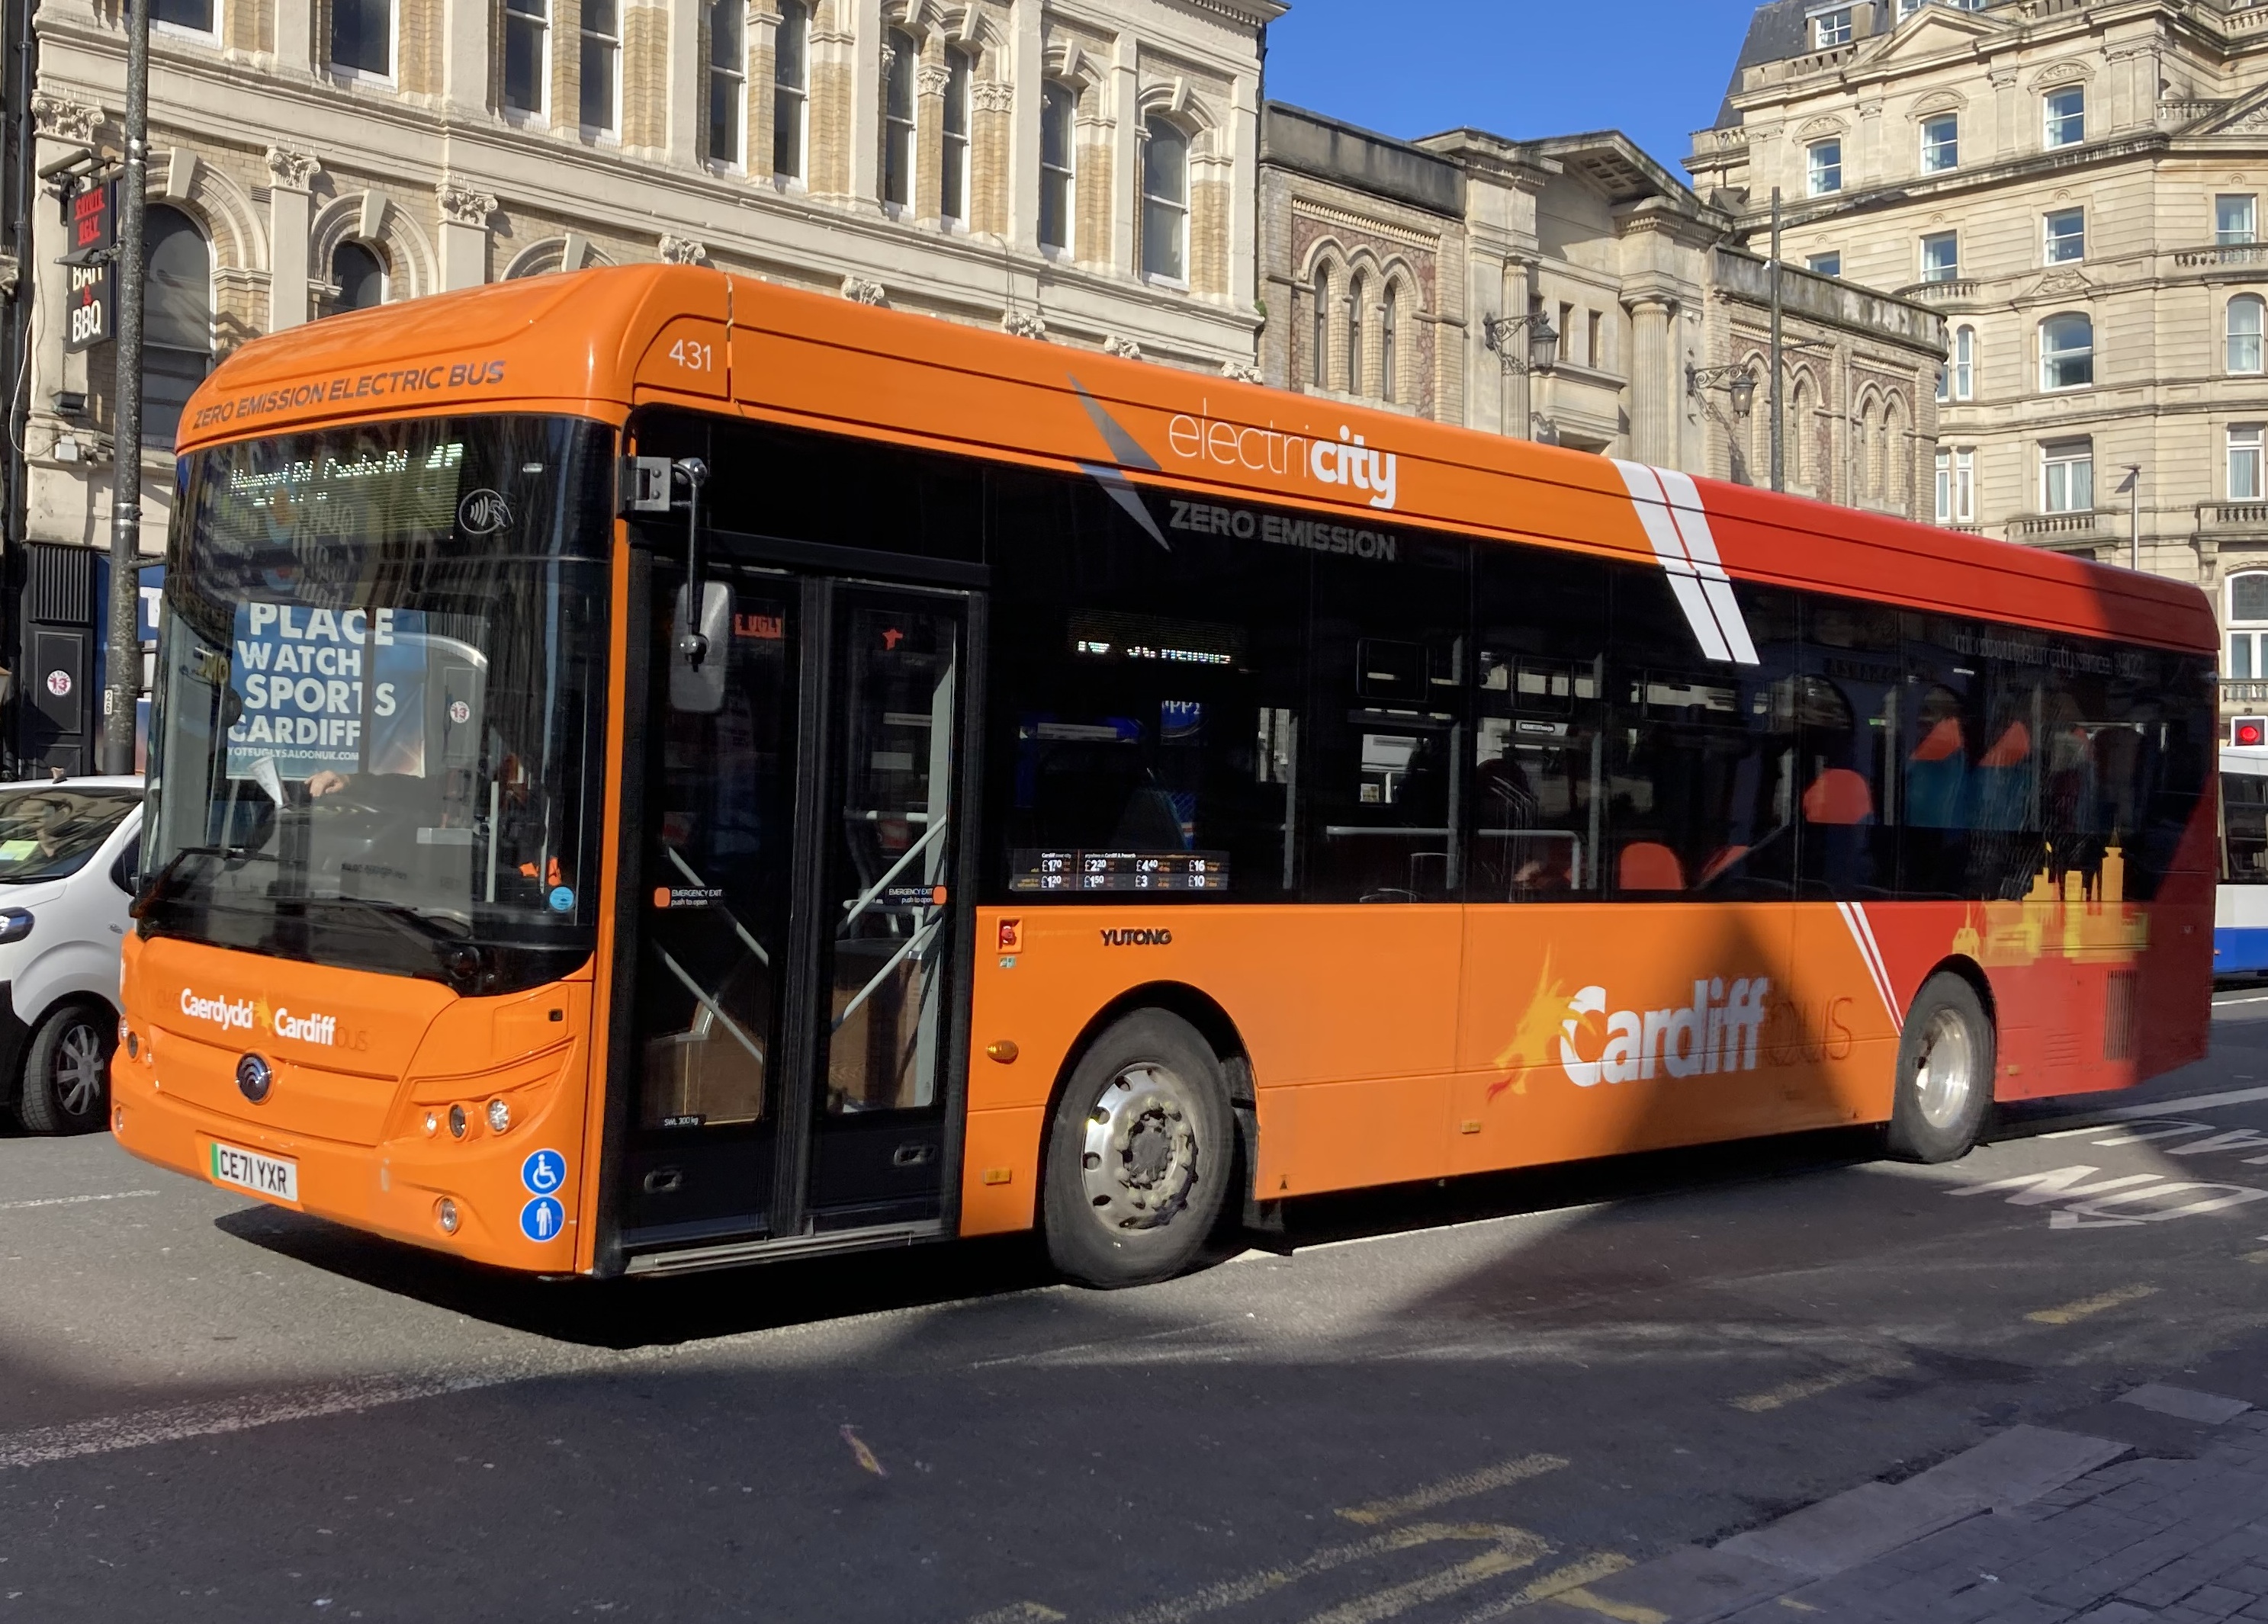 Cardiff Bus - Wikipedia